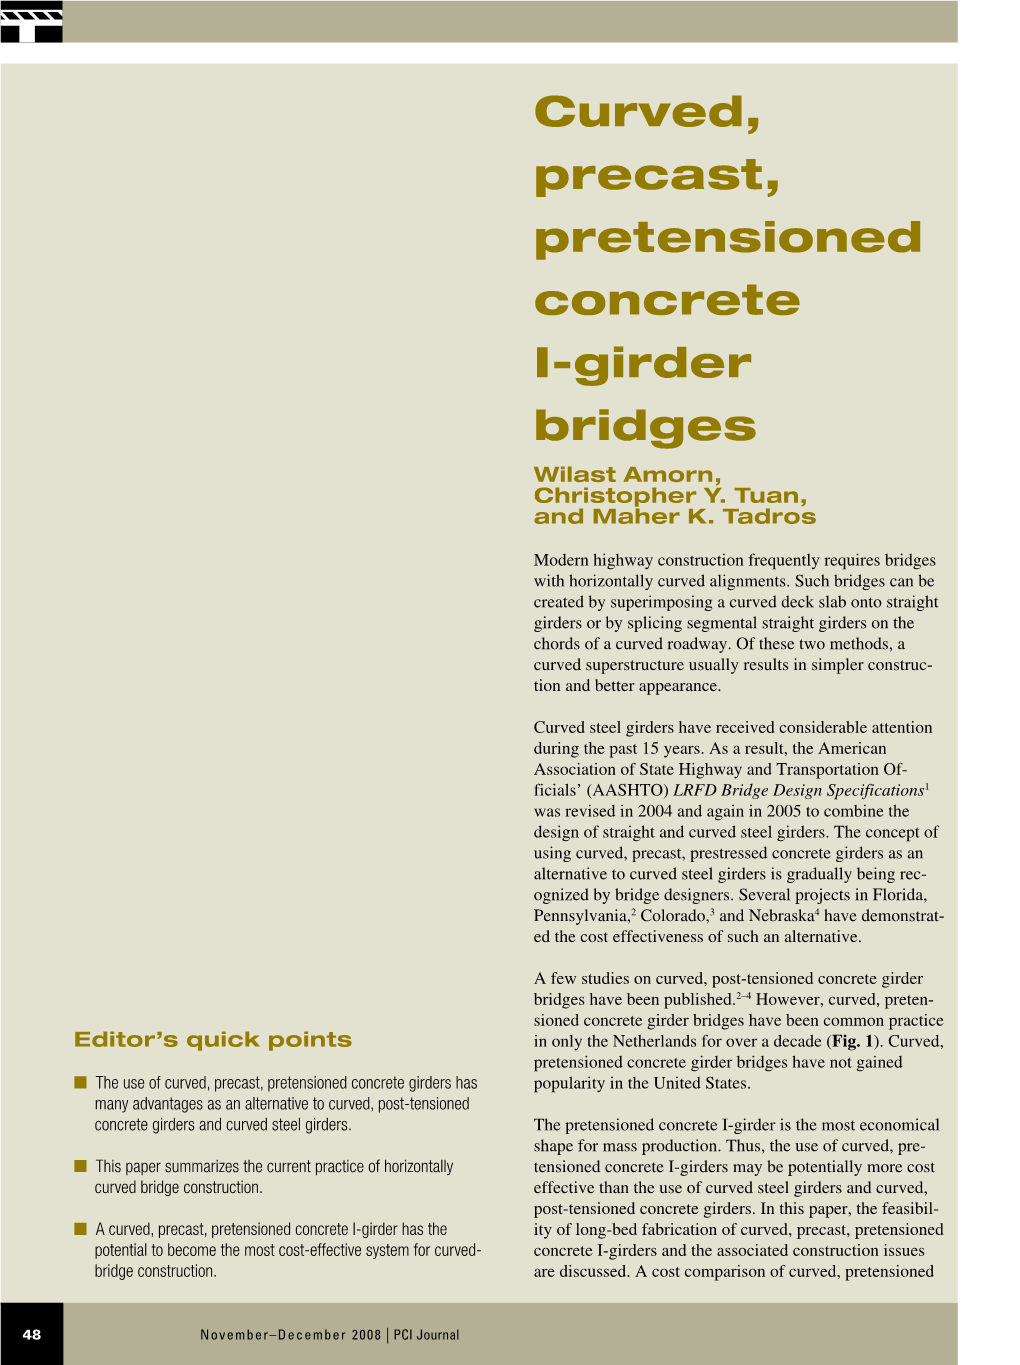 Curved Precast, Pretensioned Concrete I-Girder Bridges, Amorn